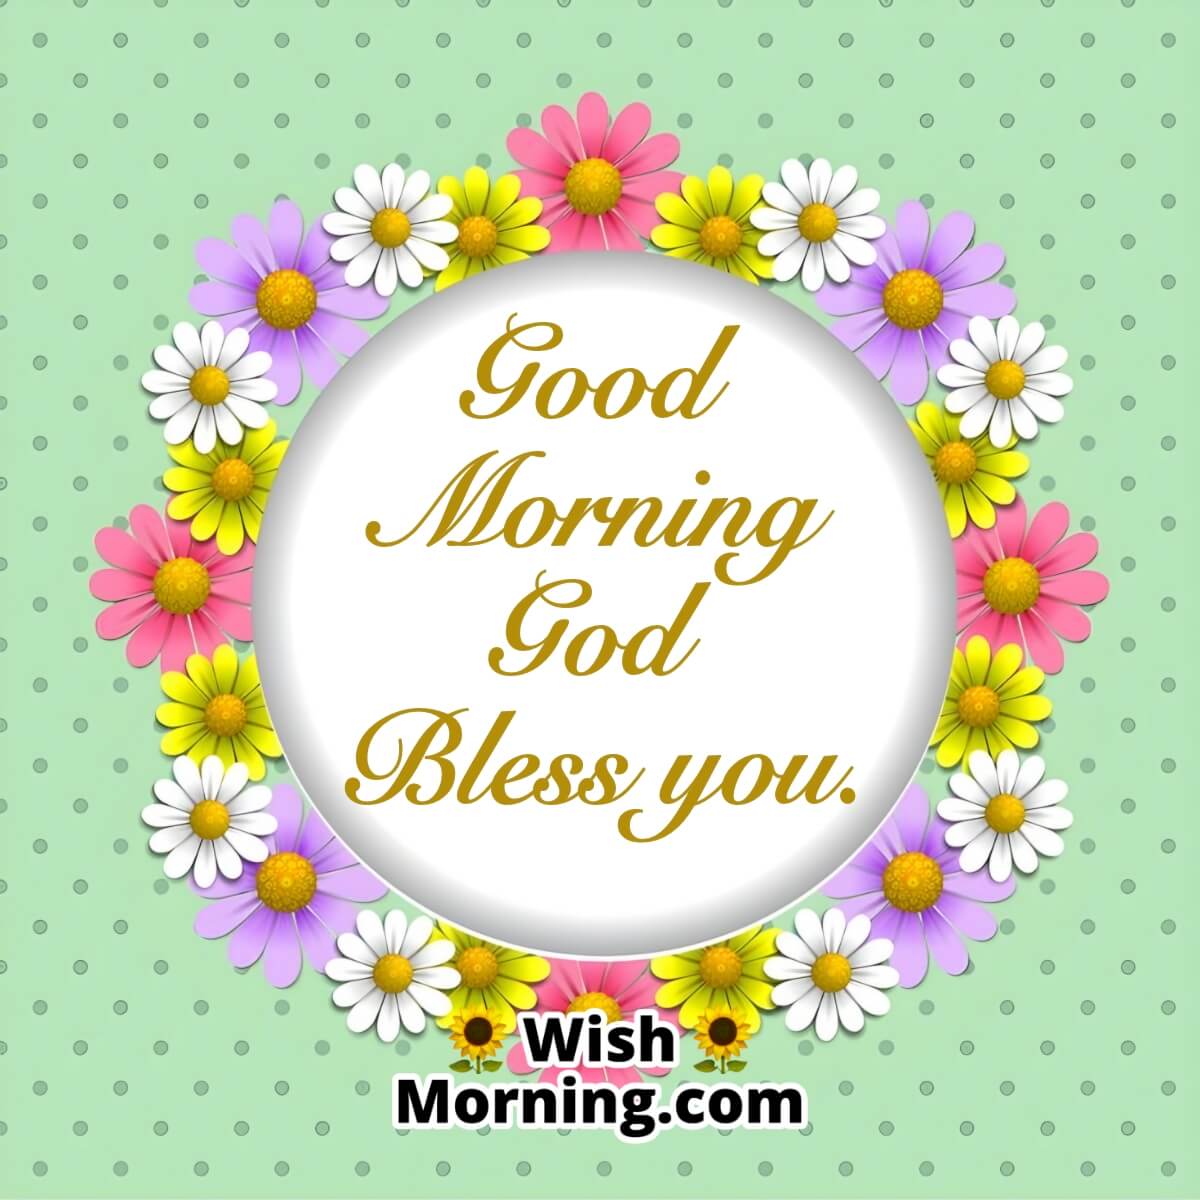 Good Morning God Bless You - Wish Morning